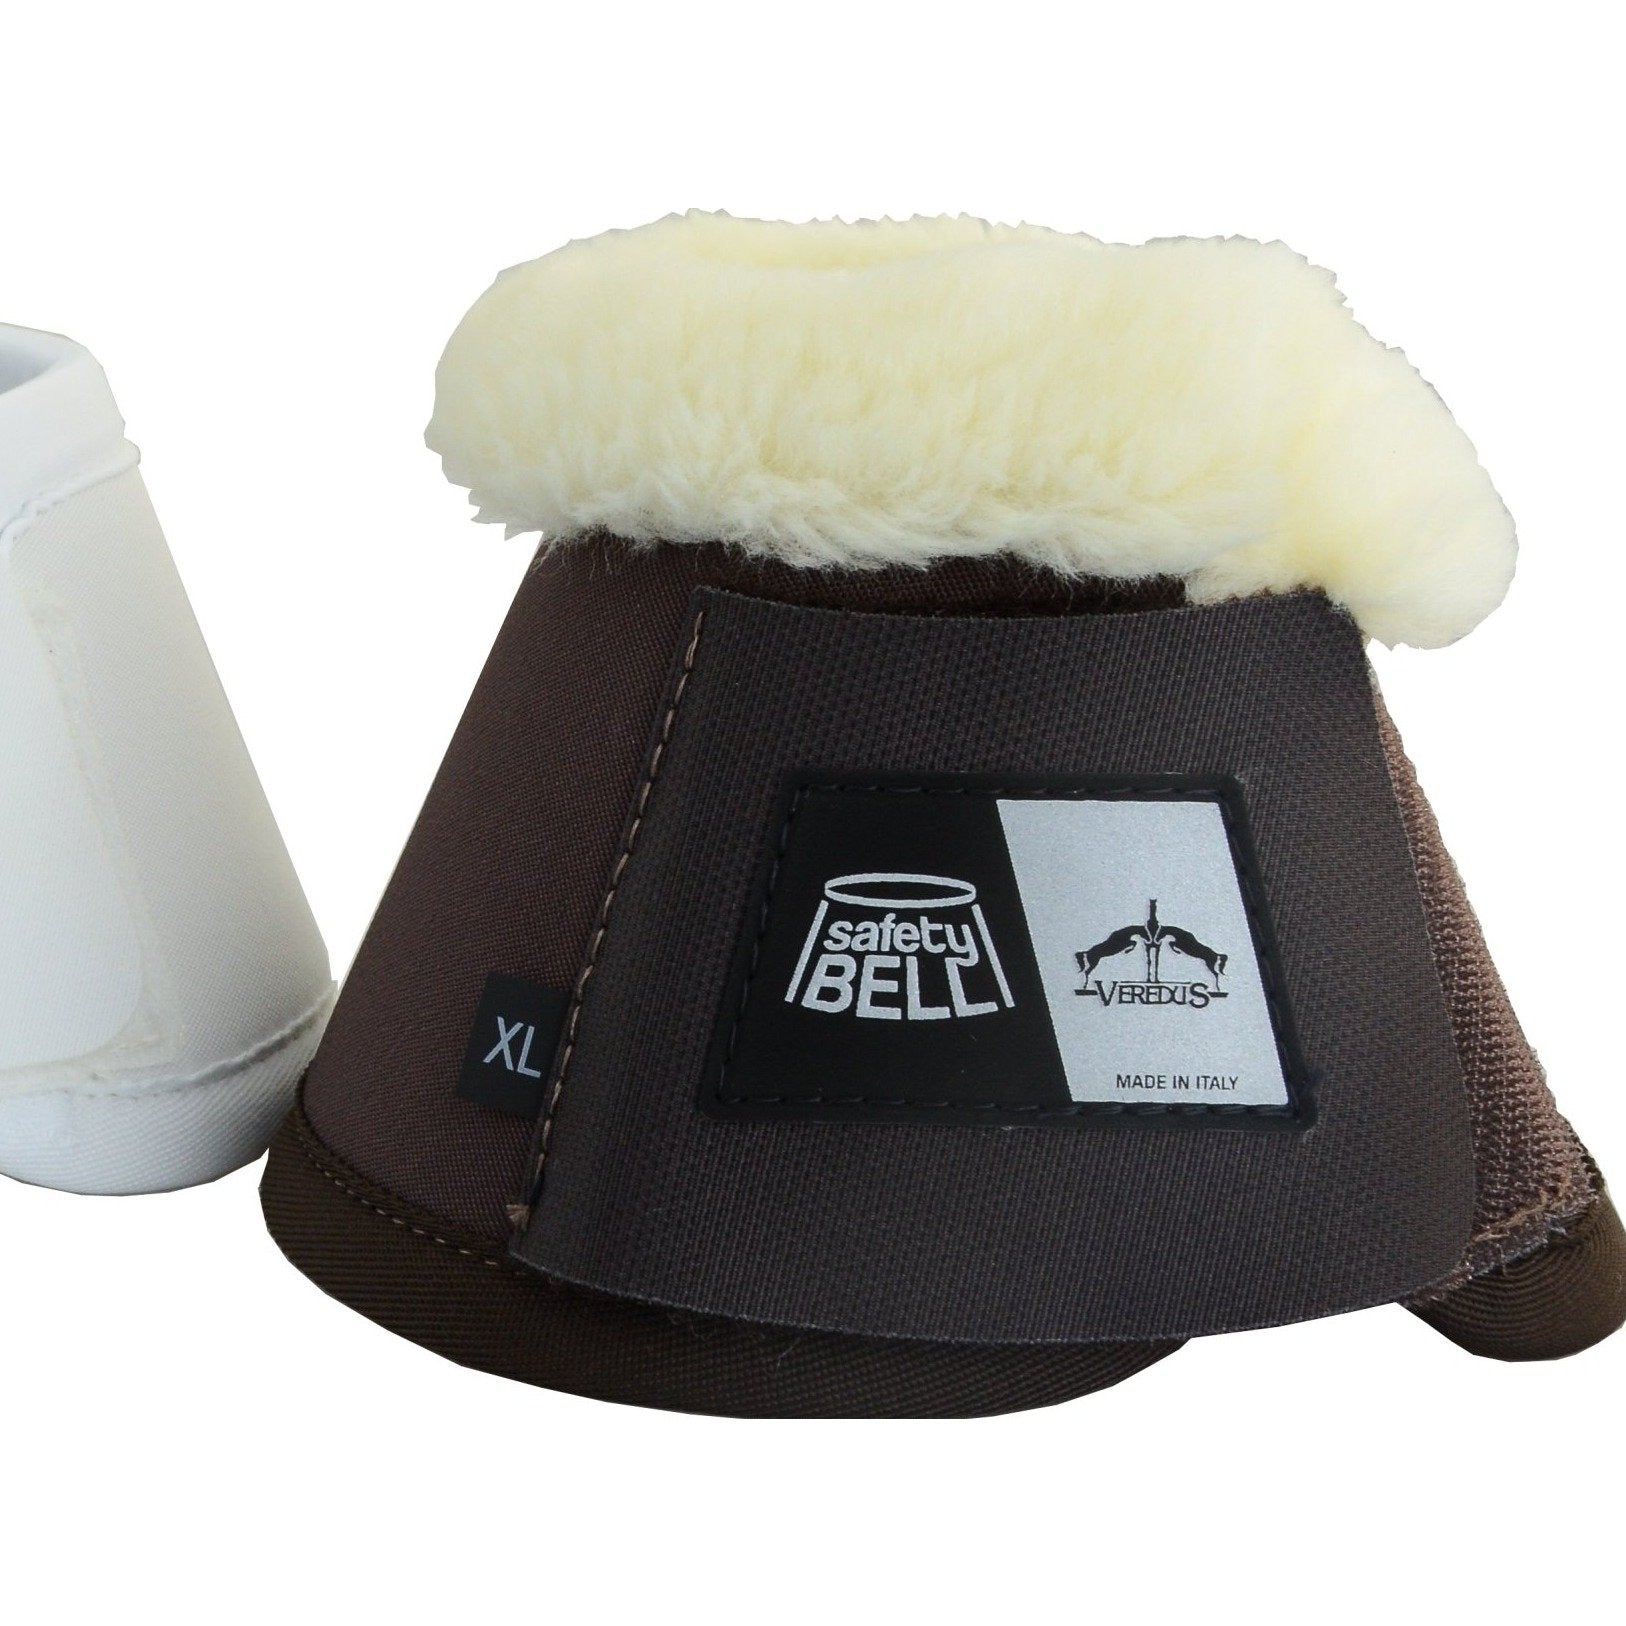 Veredus Safety Bell Light - New! Faux Sheepskin top